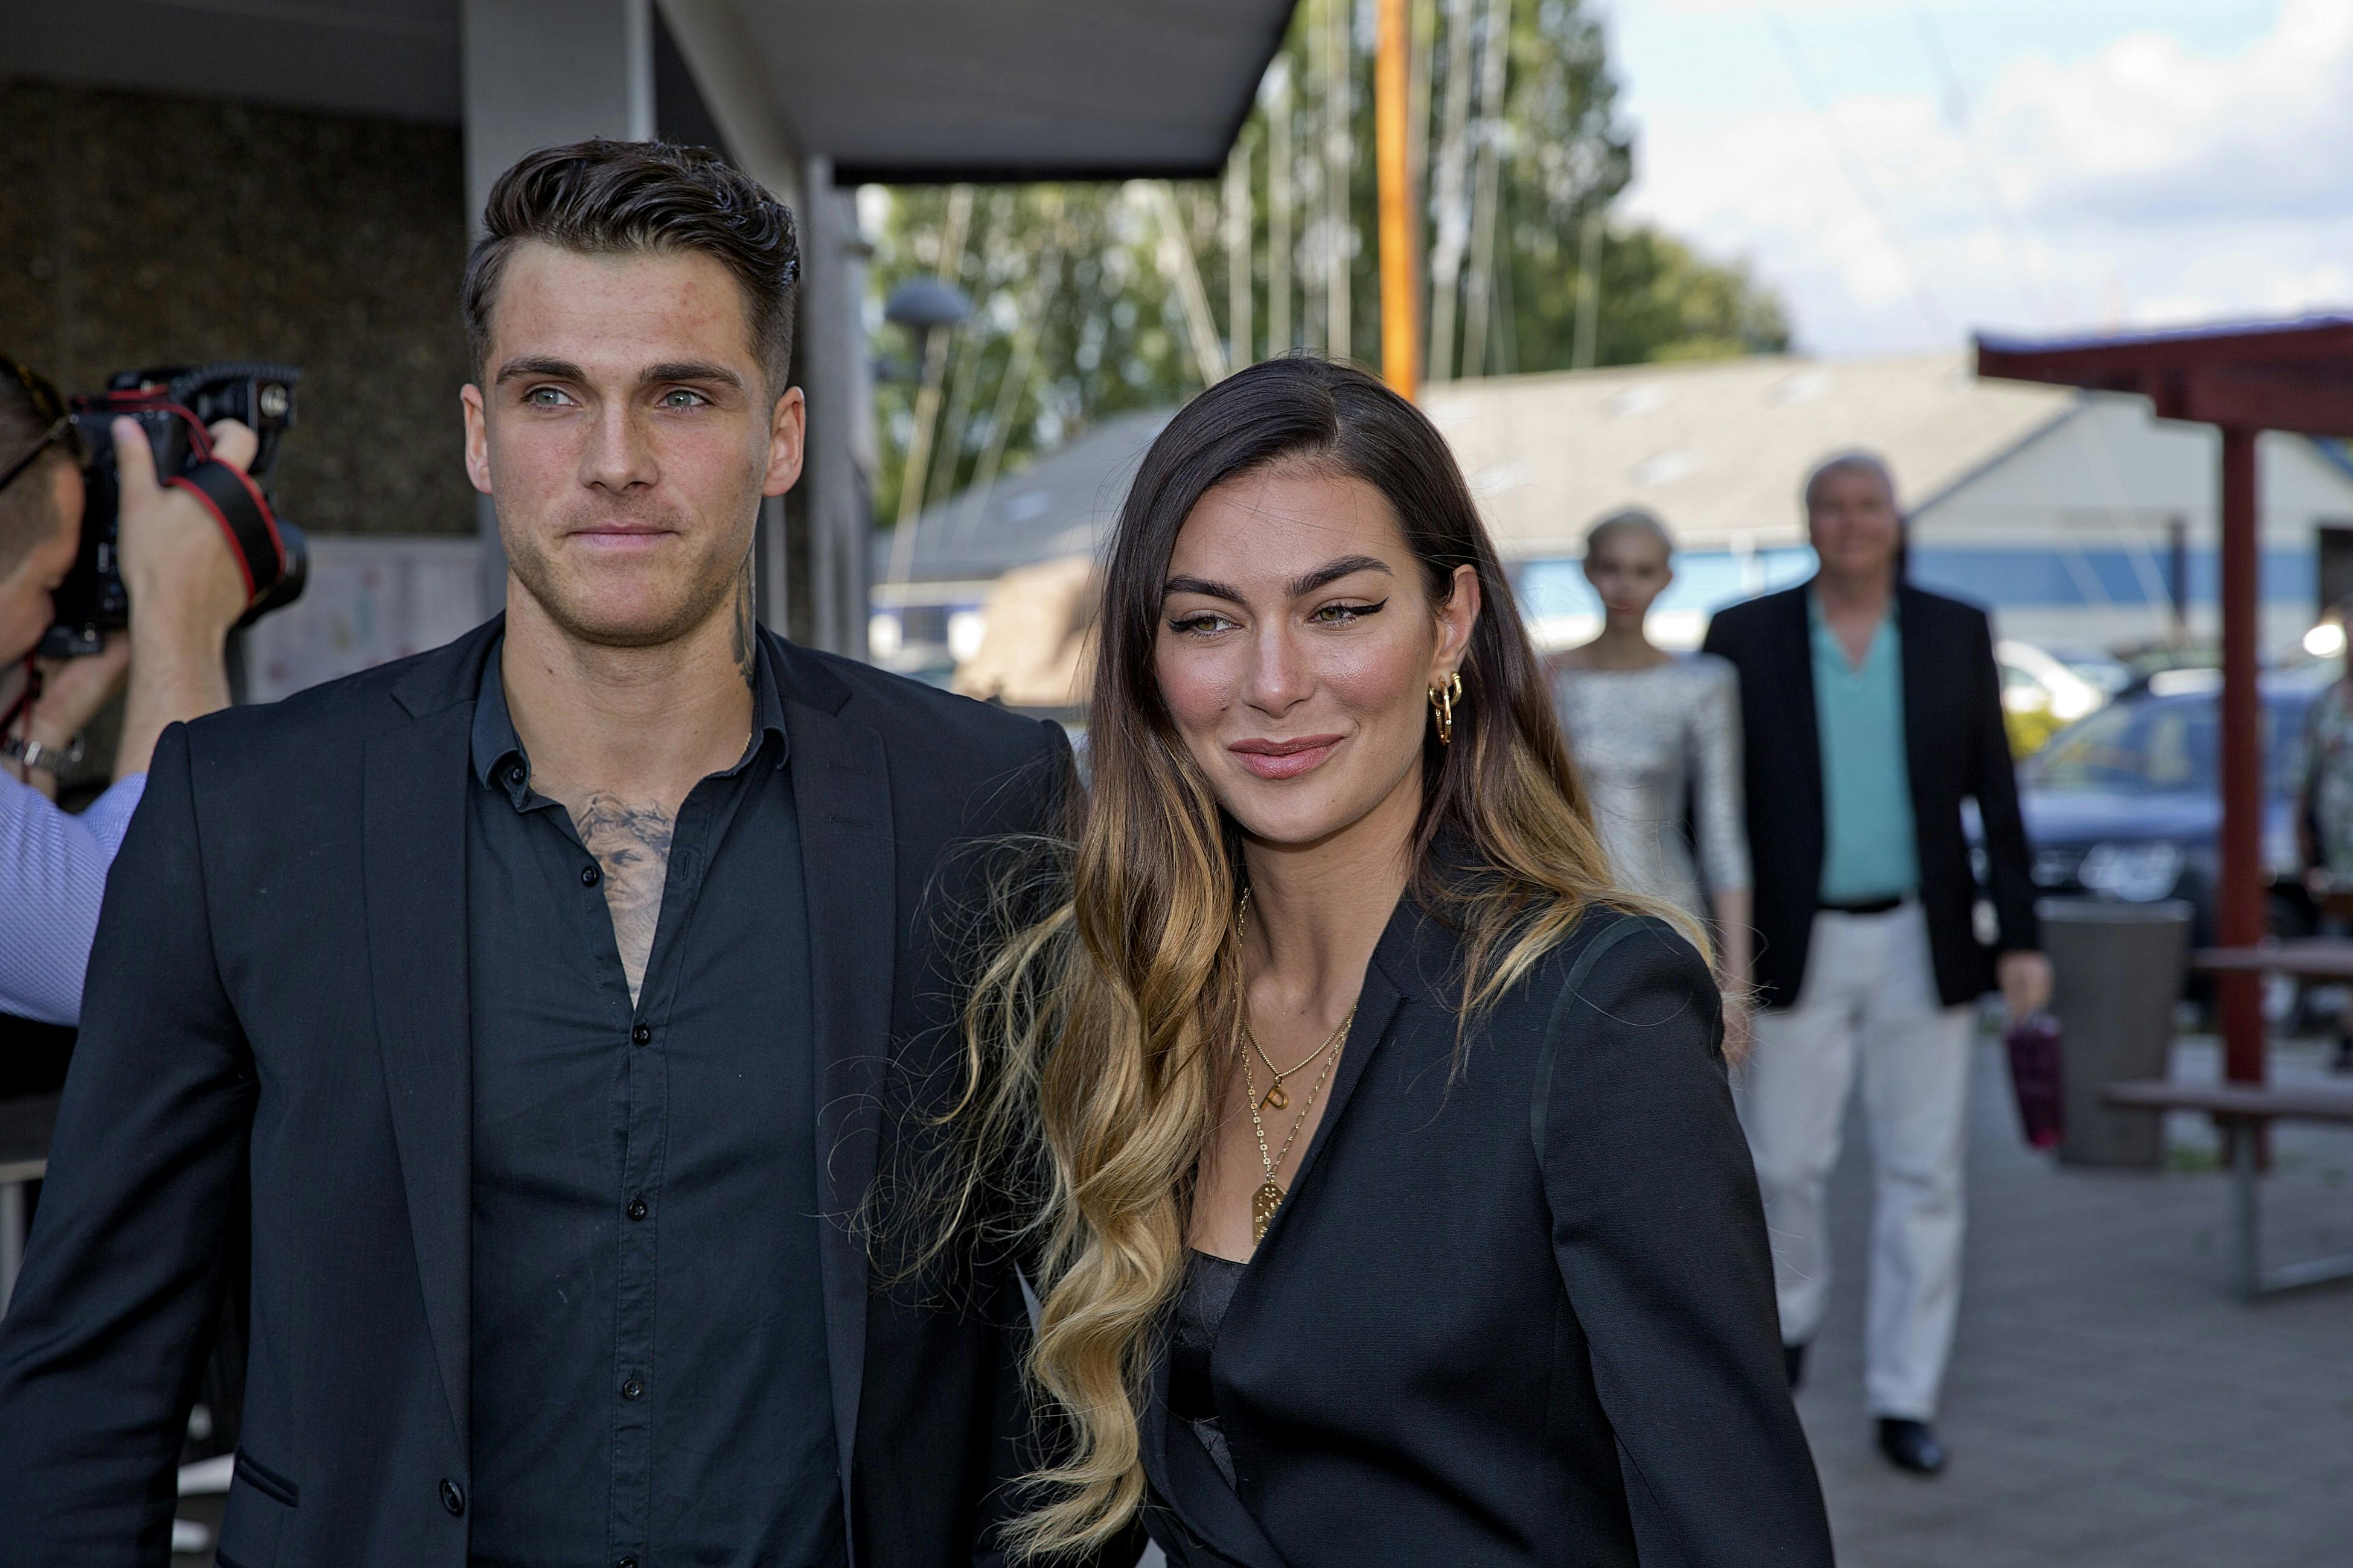 Patrick og Michala Brylov – tidligere Michala Kjær - blev gift i 2020.